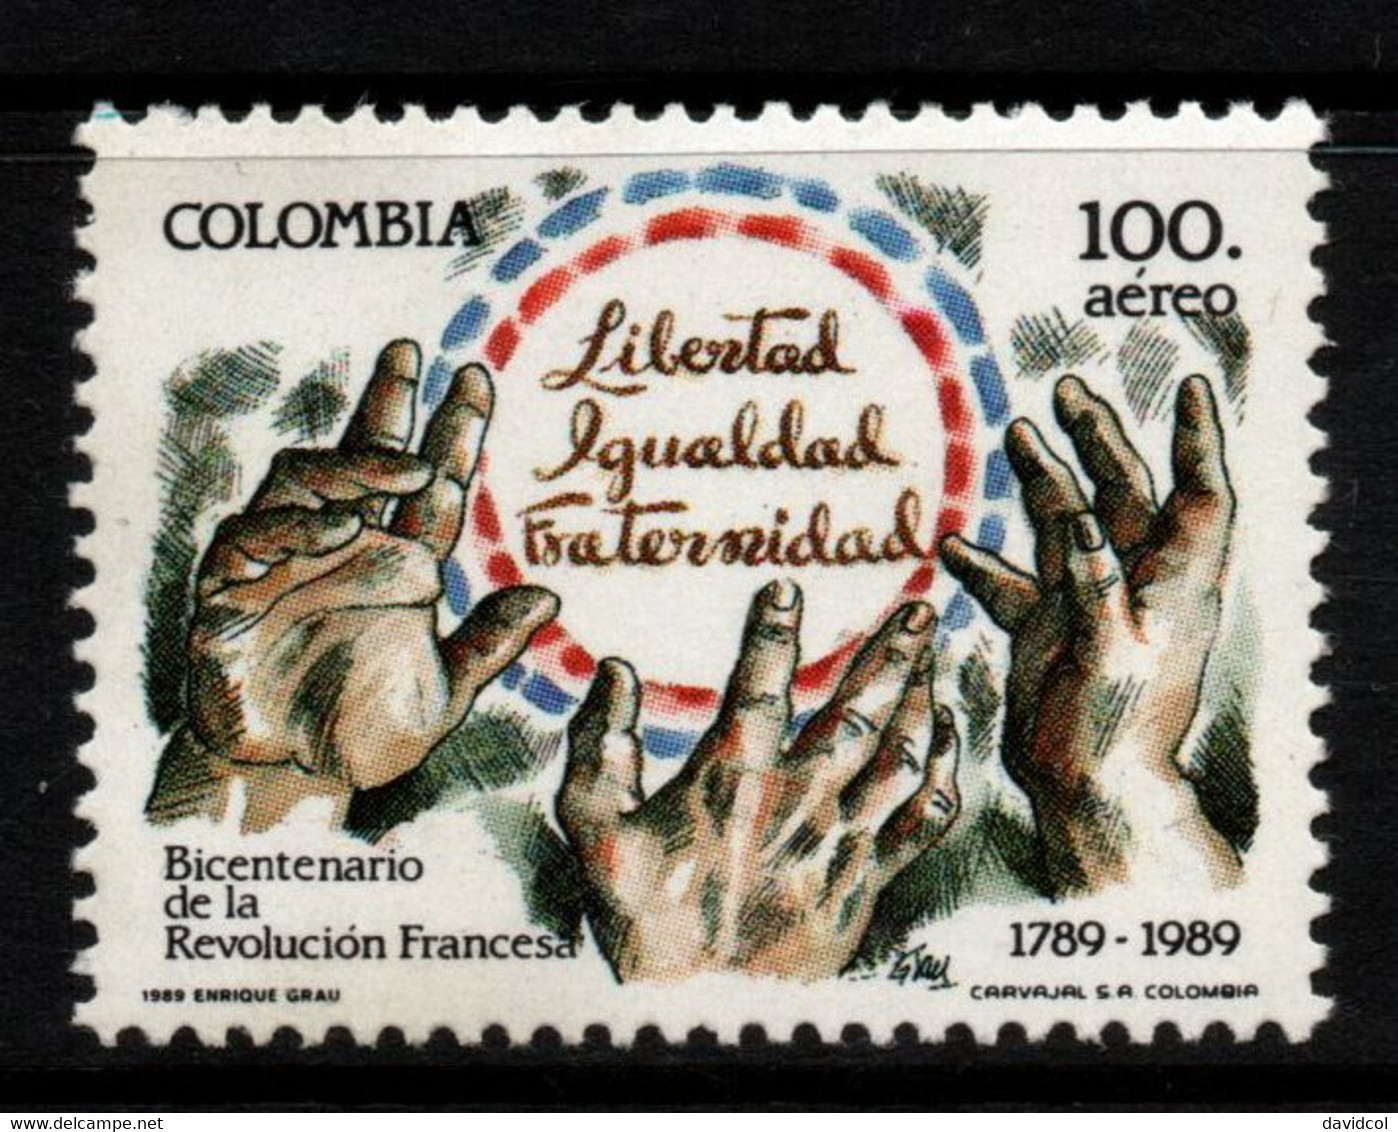 05- KOLUMBIEN - 1989 - MI#:1752 - MNH- BICENTENARY OF THE FRENCH REVOLUTION  1789-1989 - Colombie